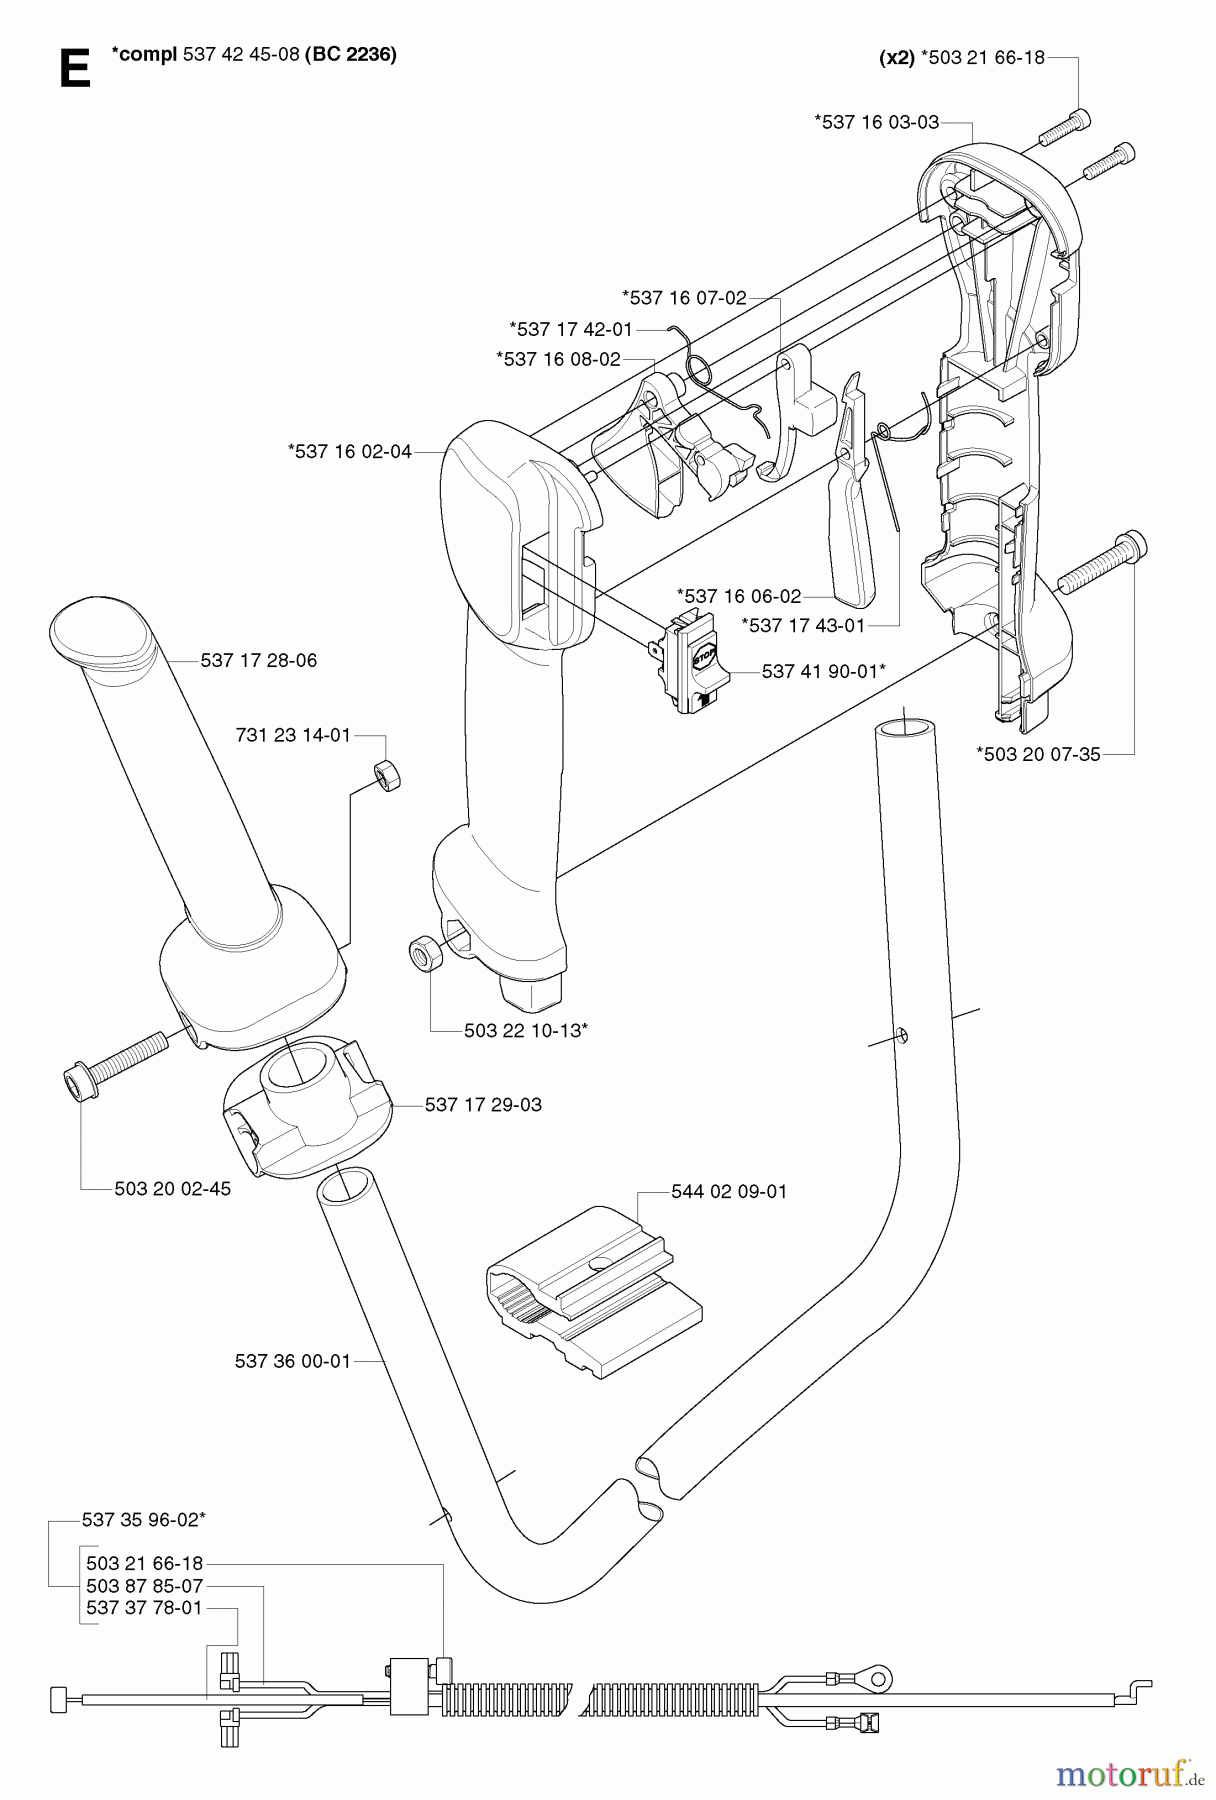  Jonsered Motorsensen, Trimmer BC2236 - Jonsered Brushcutter (2007-01) HANDLE CONTROLS #1